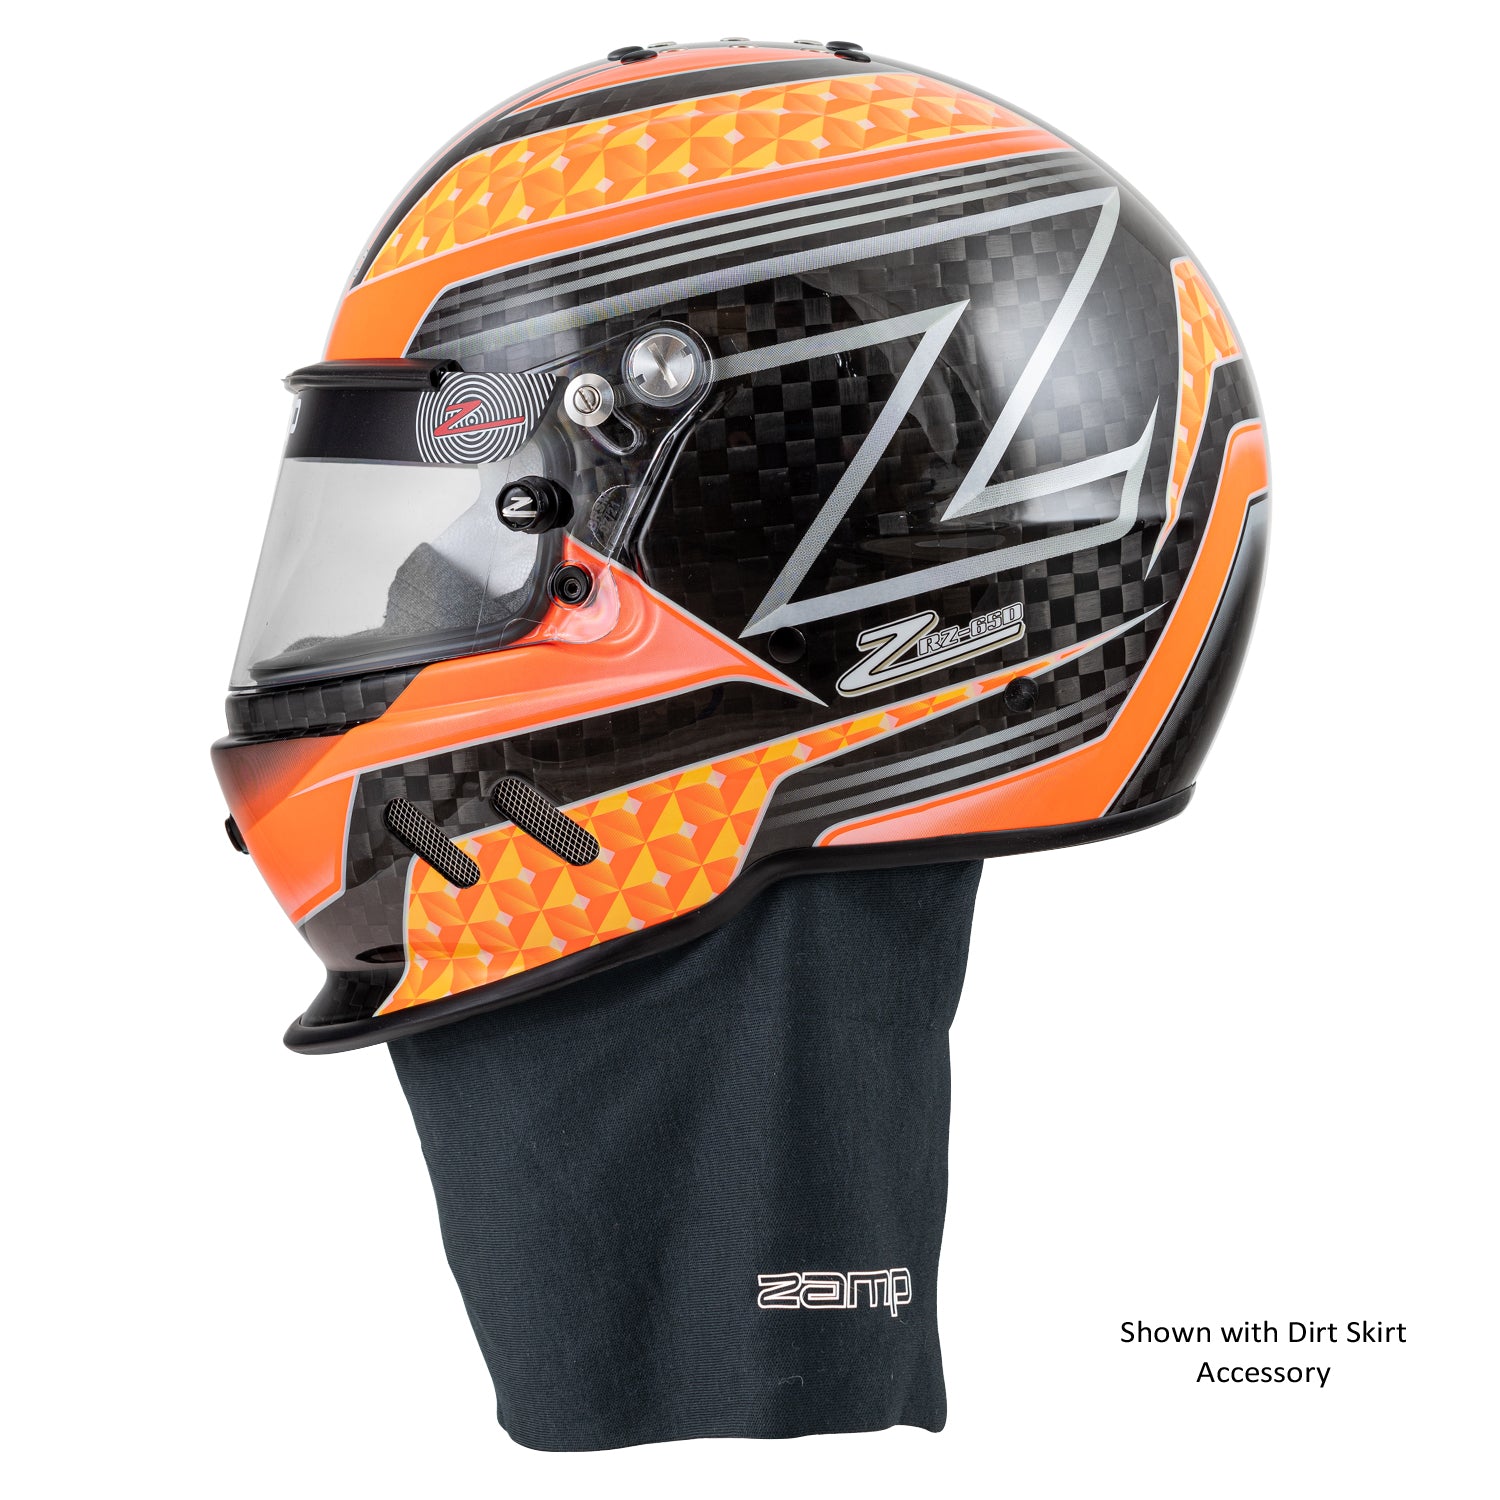 Zamp RZ-65D Graphic Helmet, Snell SA-2020